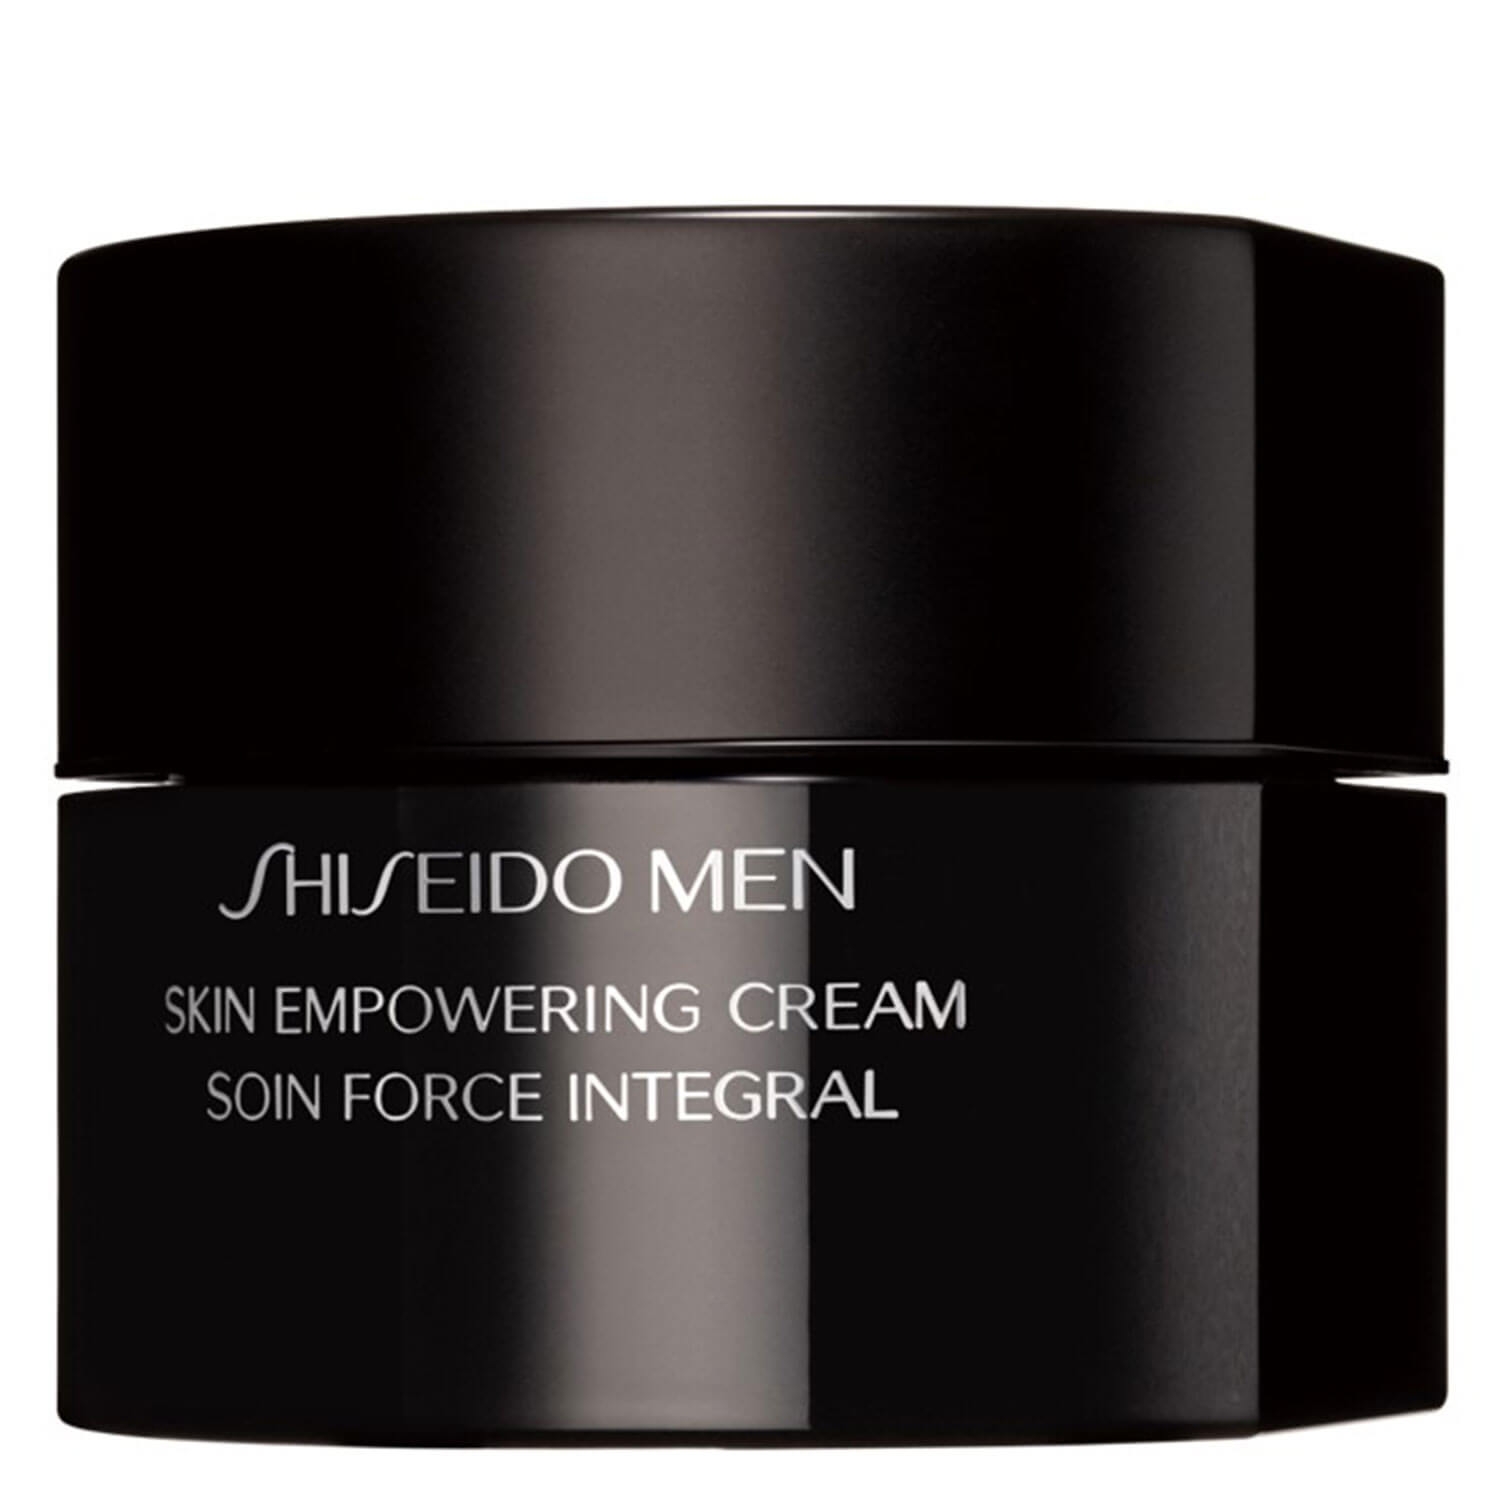 Product image from Shiseido Men - Skin Empowering Cream